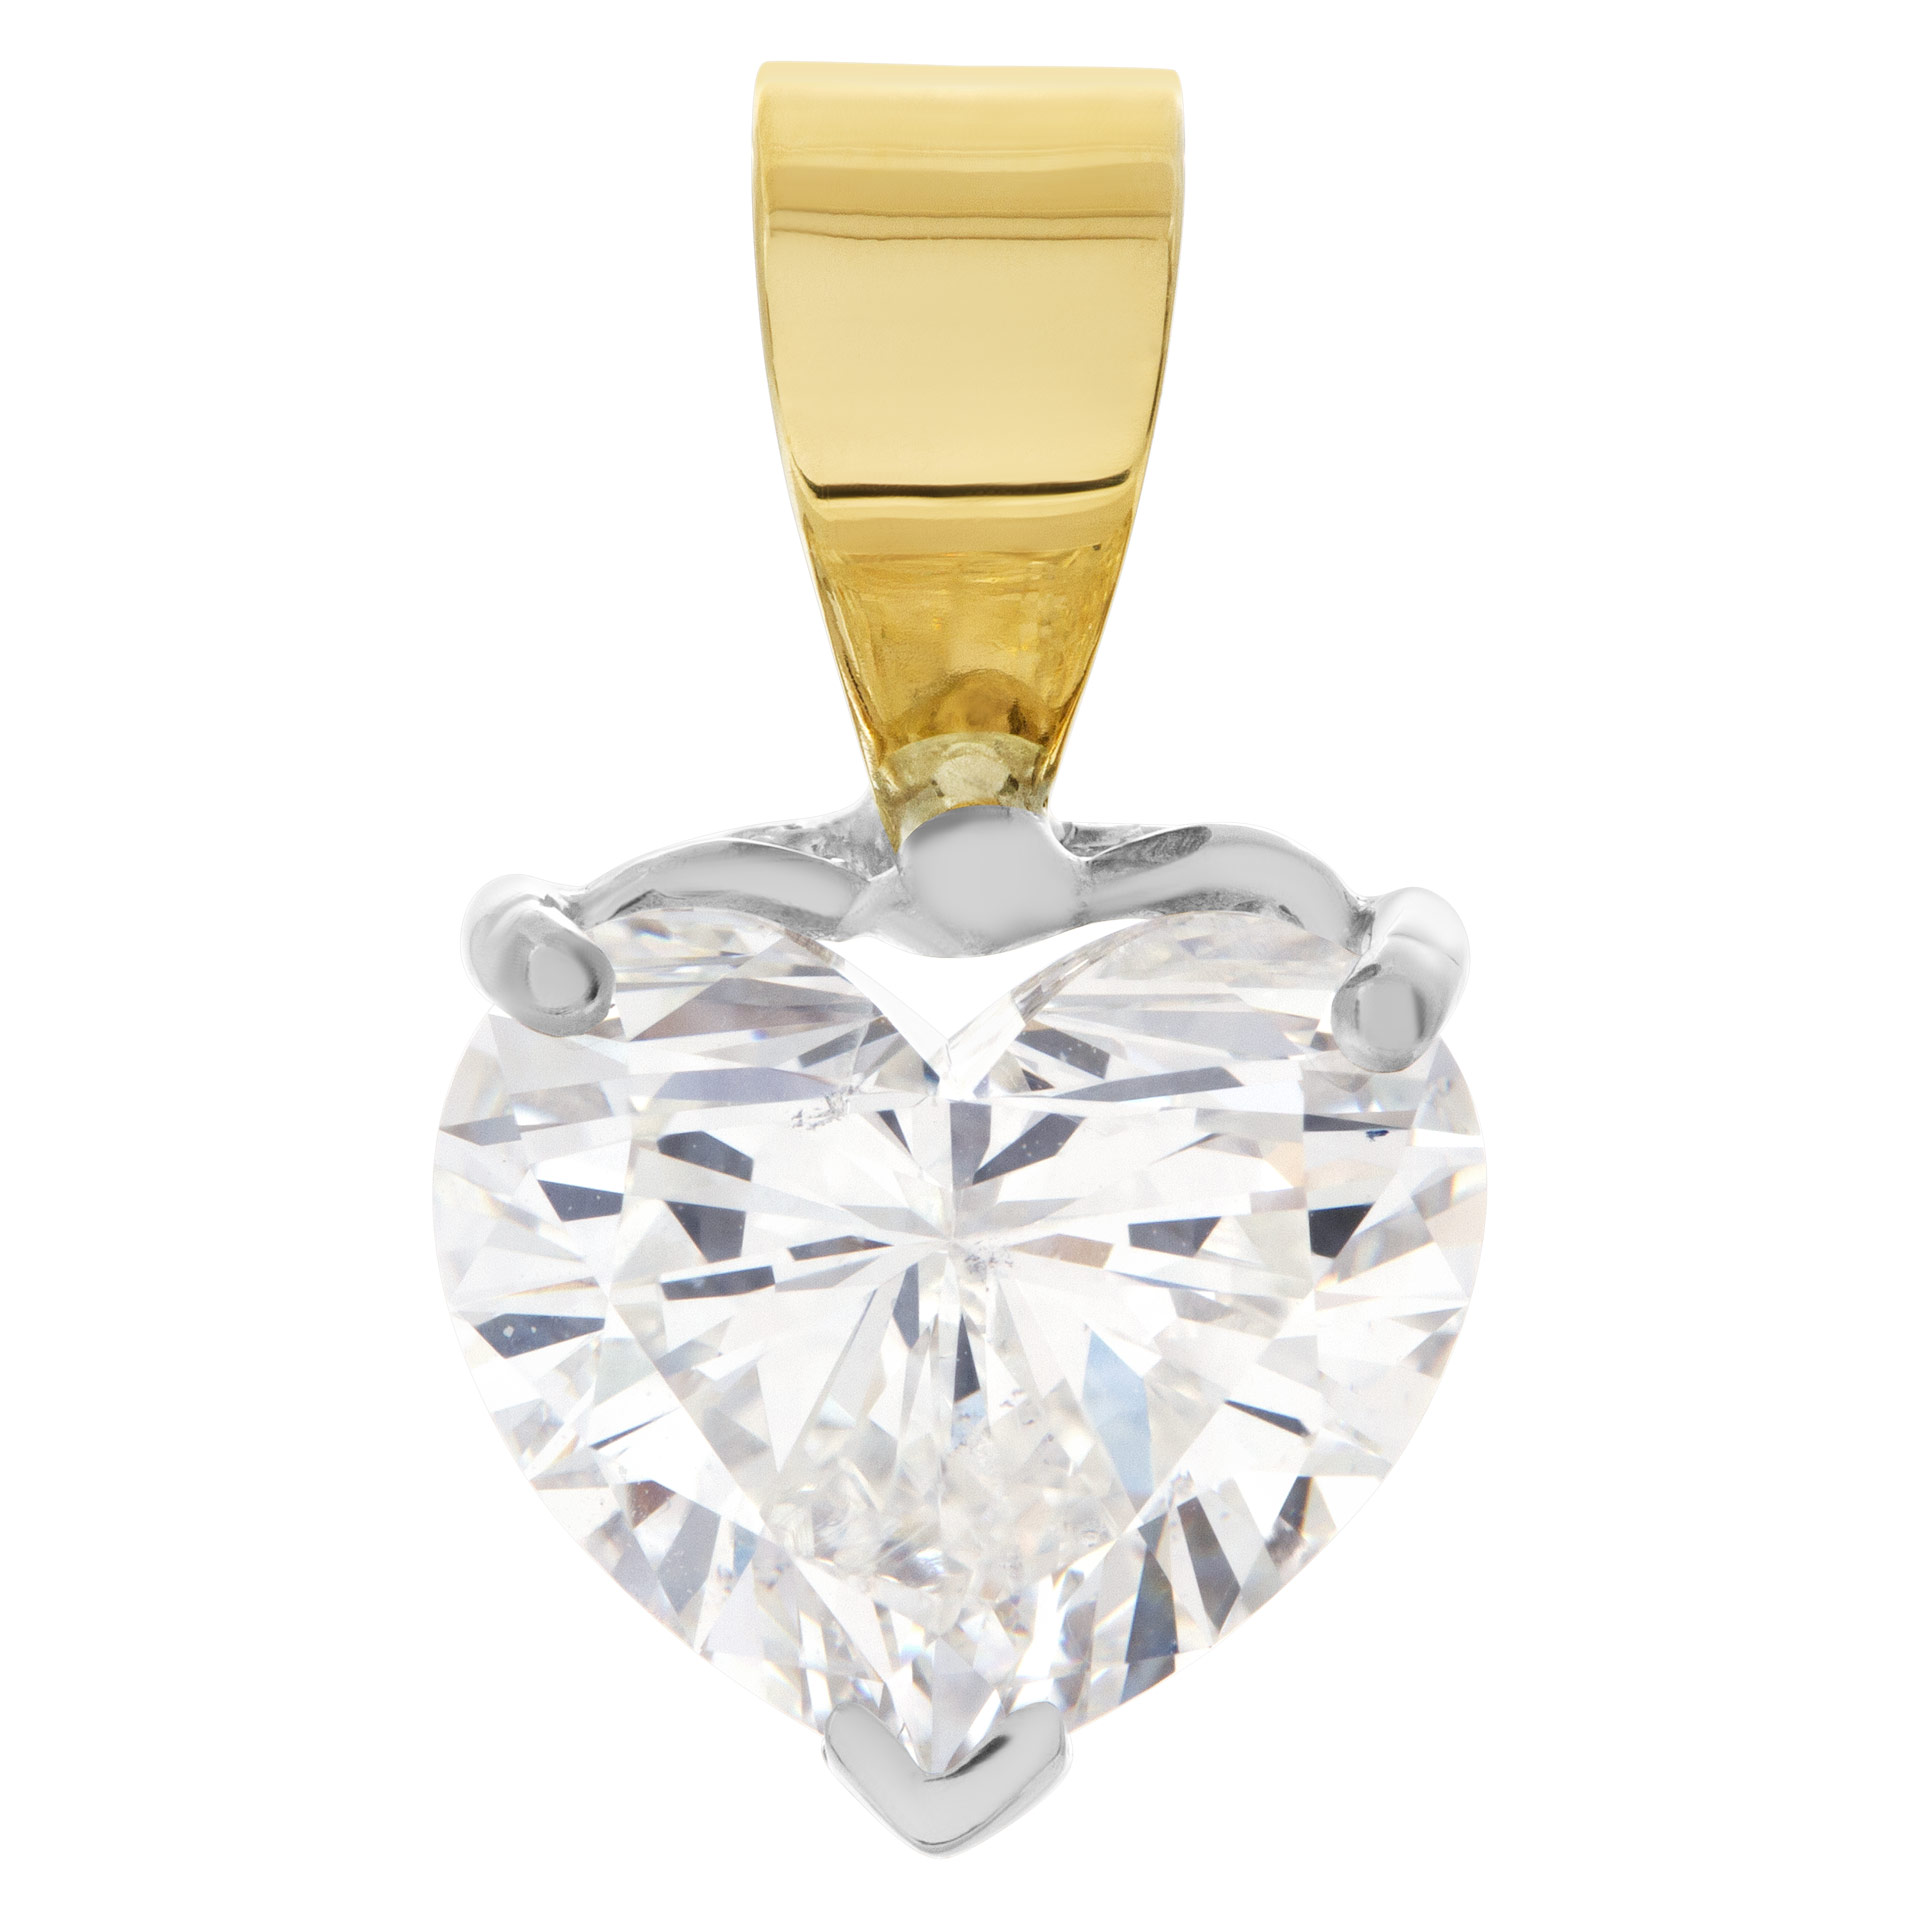 GIA certified 2.76 carat  (J color, I1 clarity) heart brilliant cut diamond in a pendant setting image 1